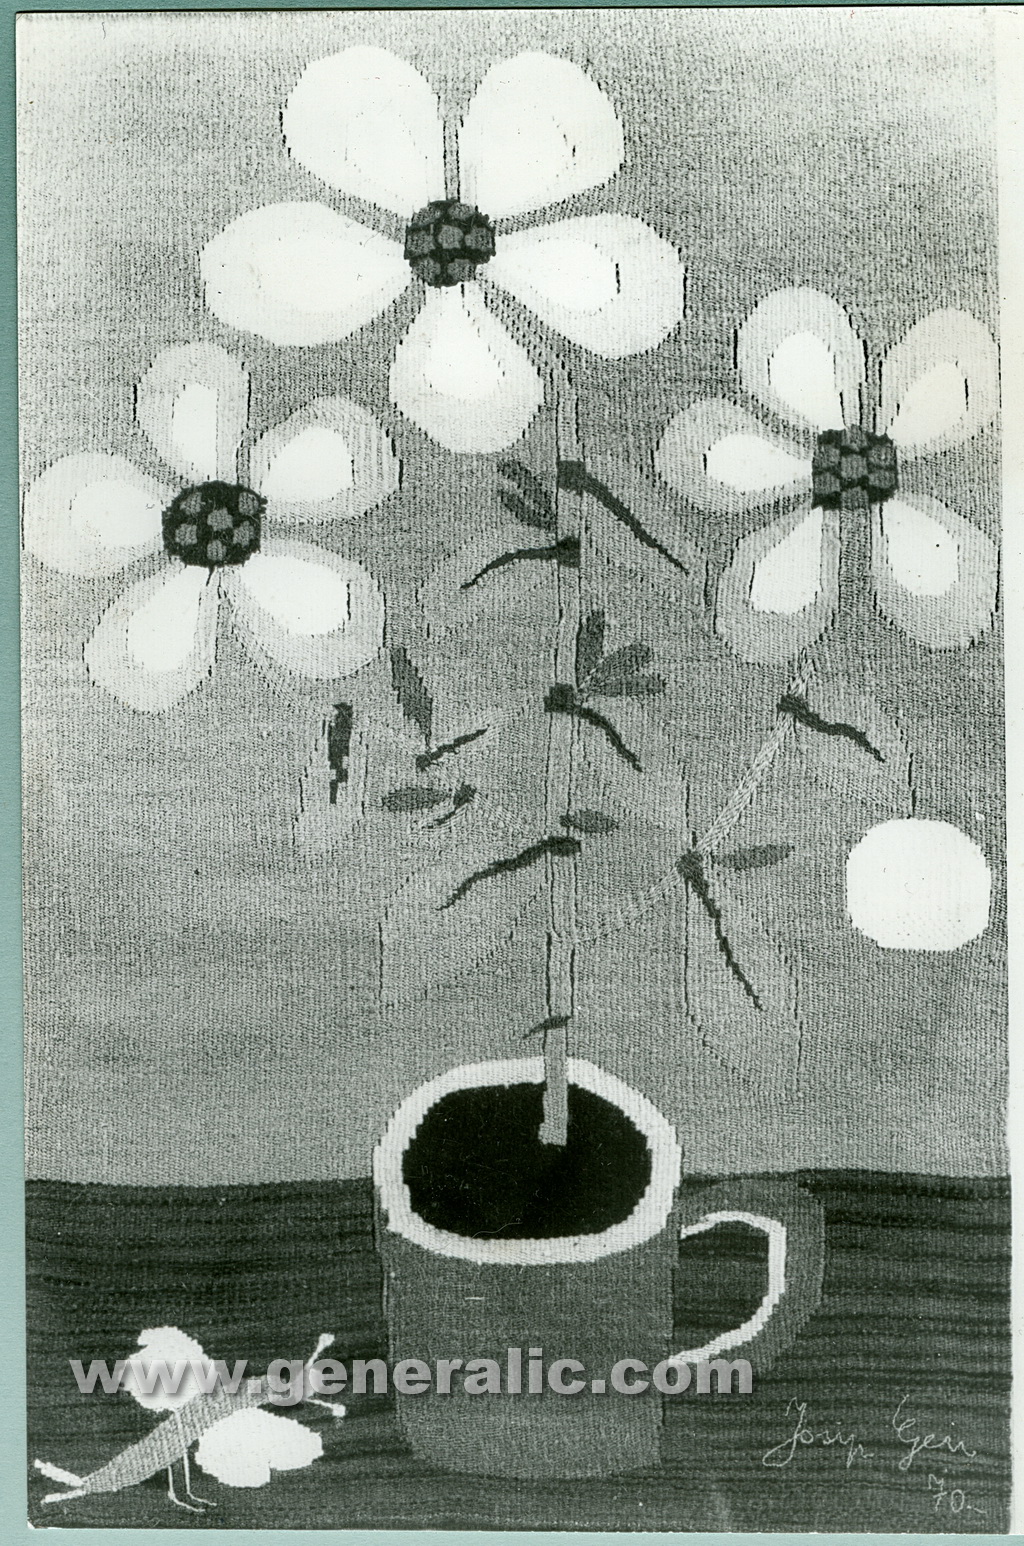 Josip Generalic, 1970, Flowers in a cup, tapestry